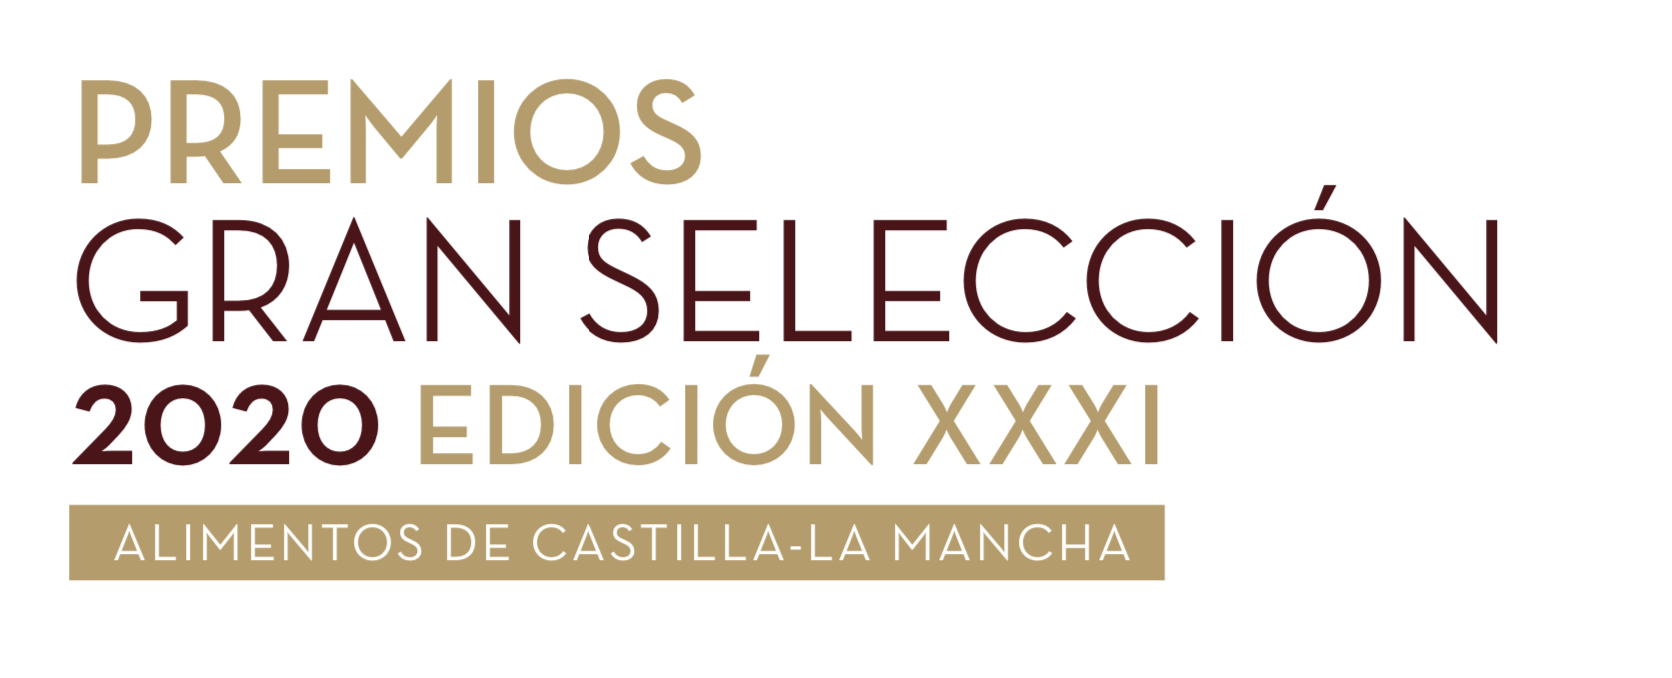 Premios Castilla-La Mancha